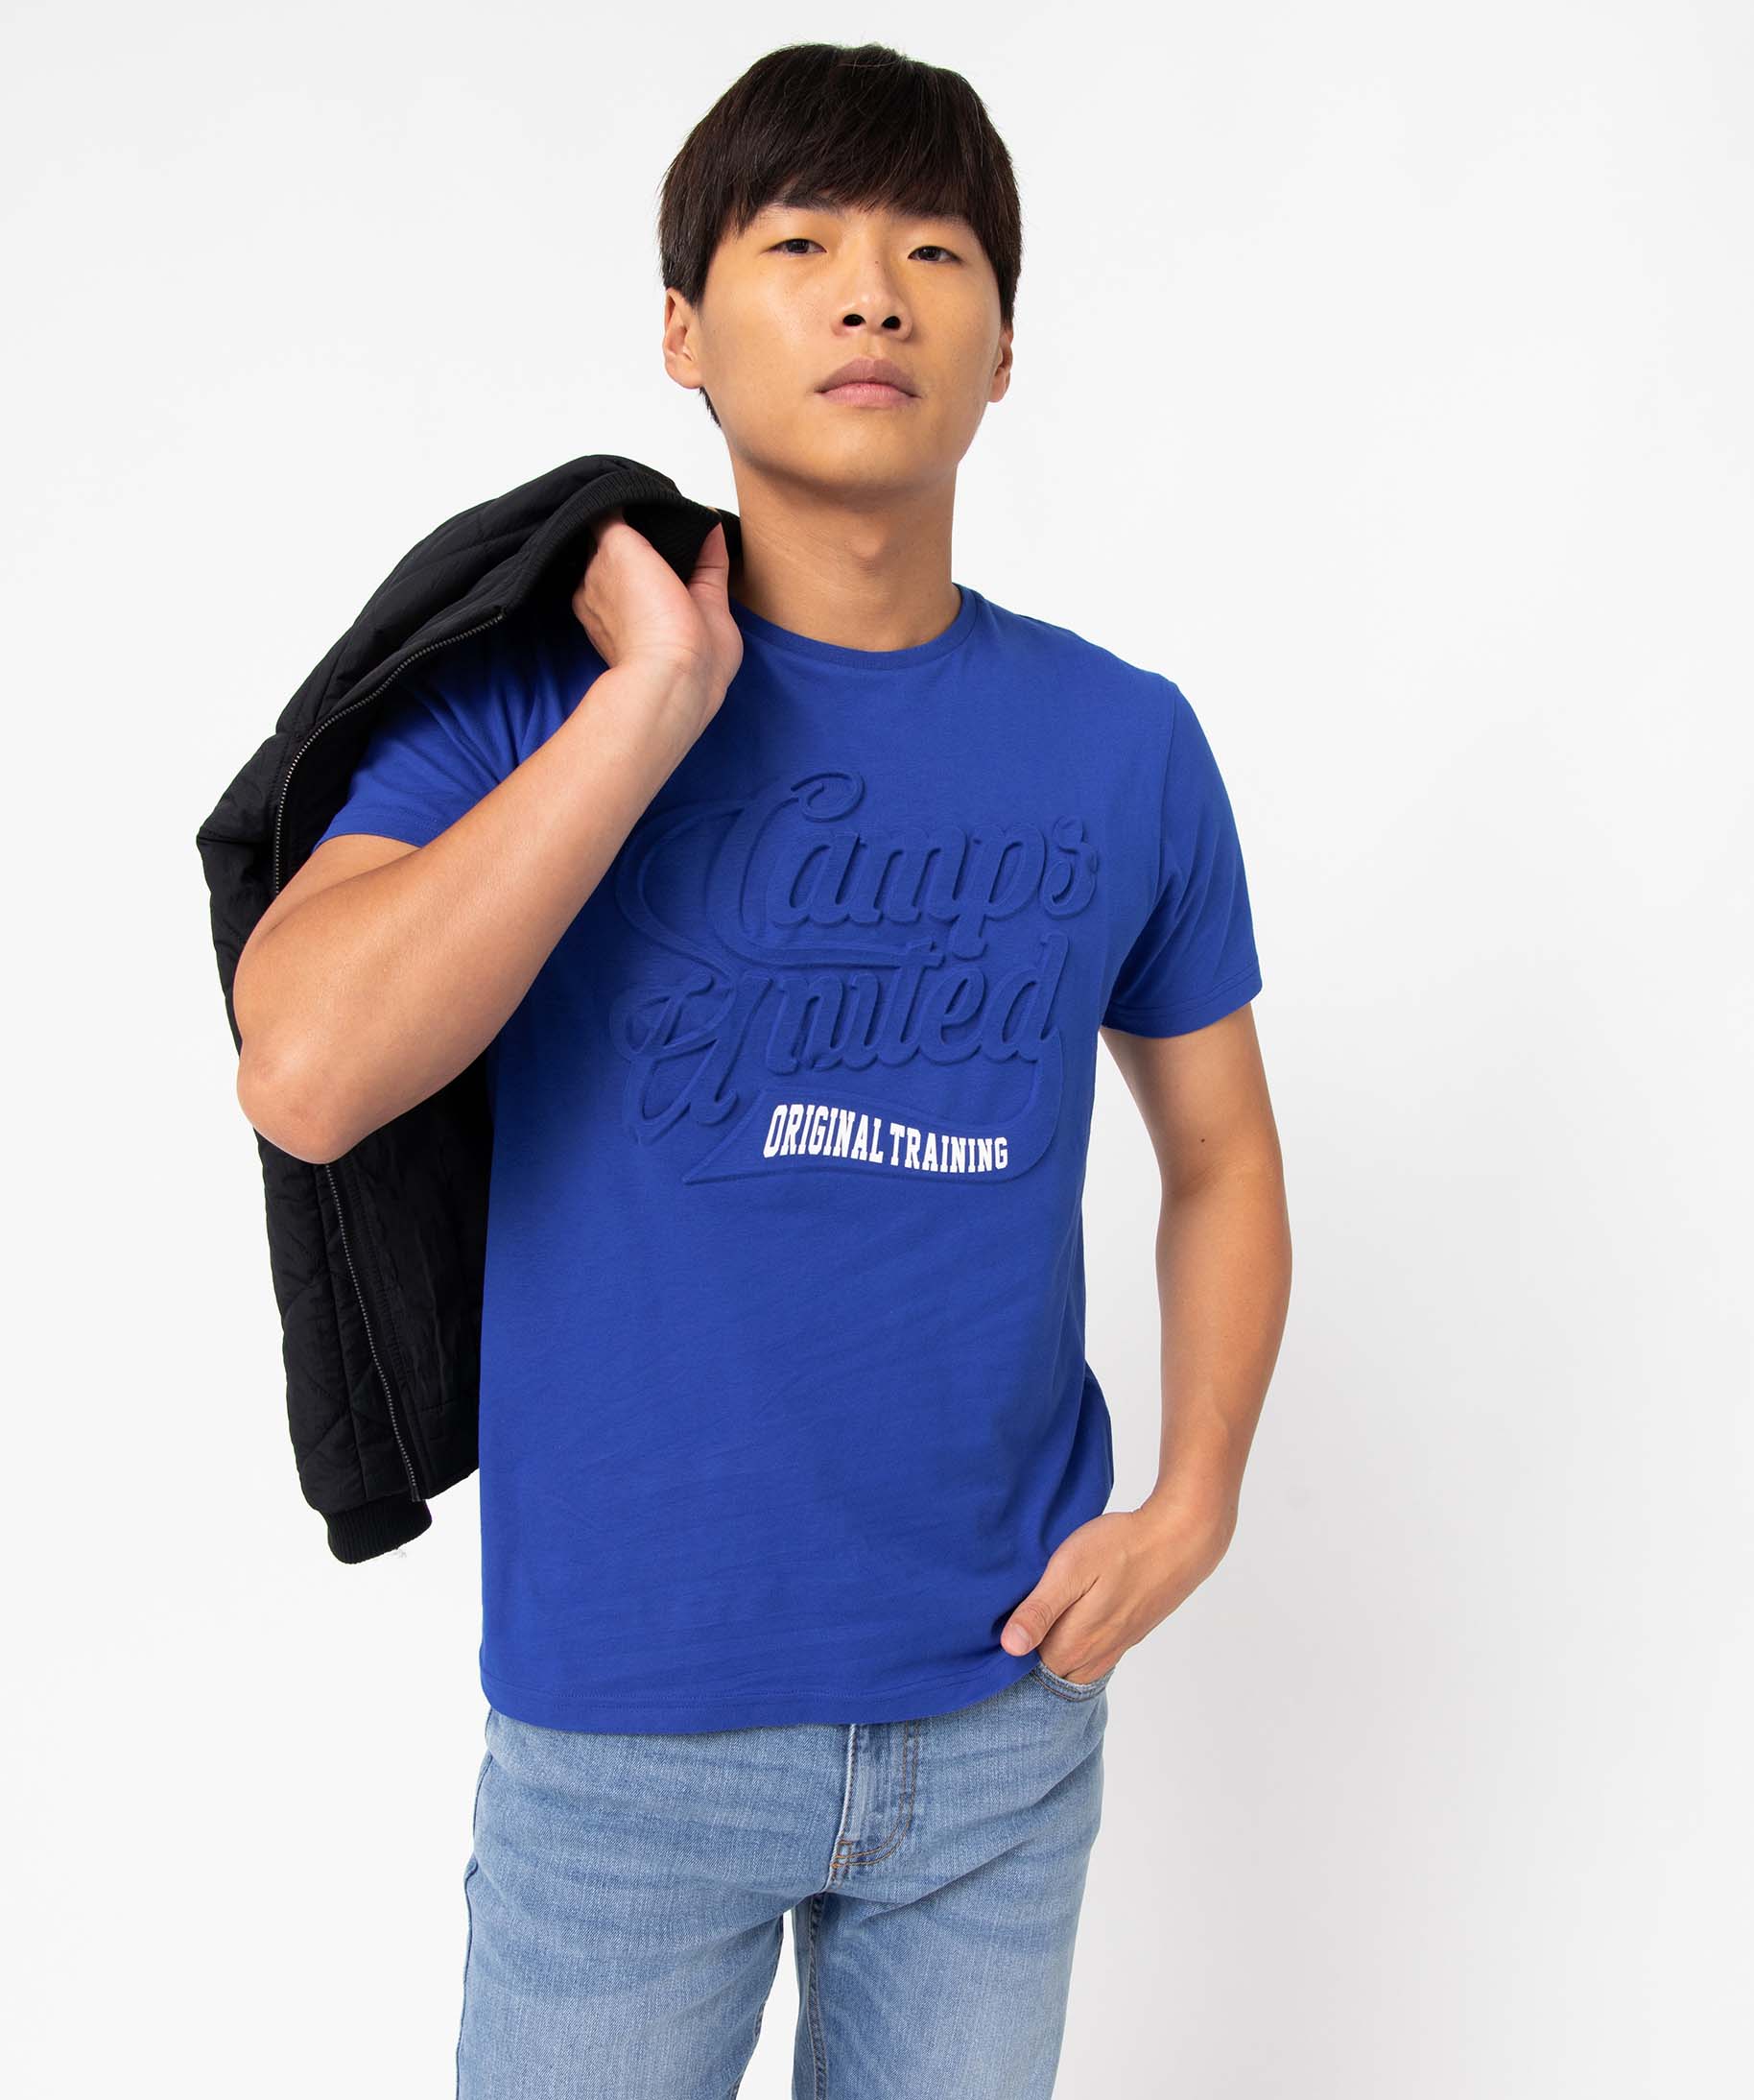 tee-shirt homme avec inscription gaufree - camps united bleu tee-shirts